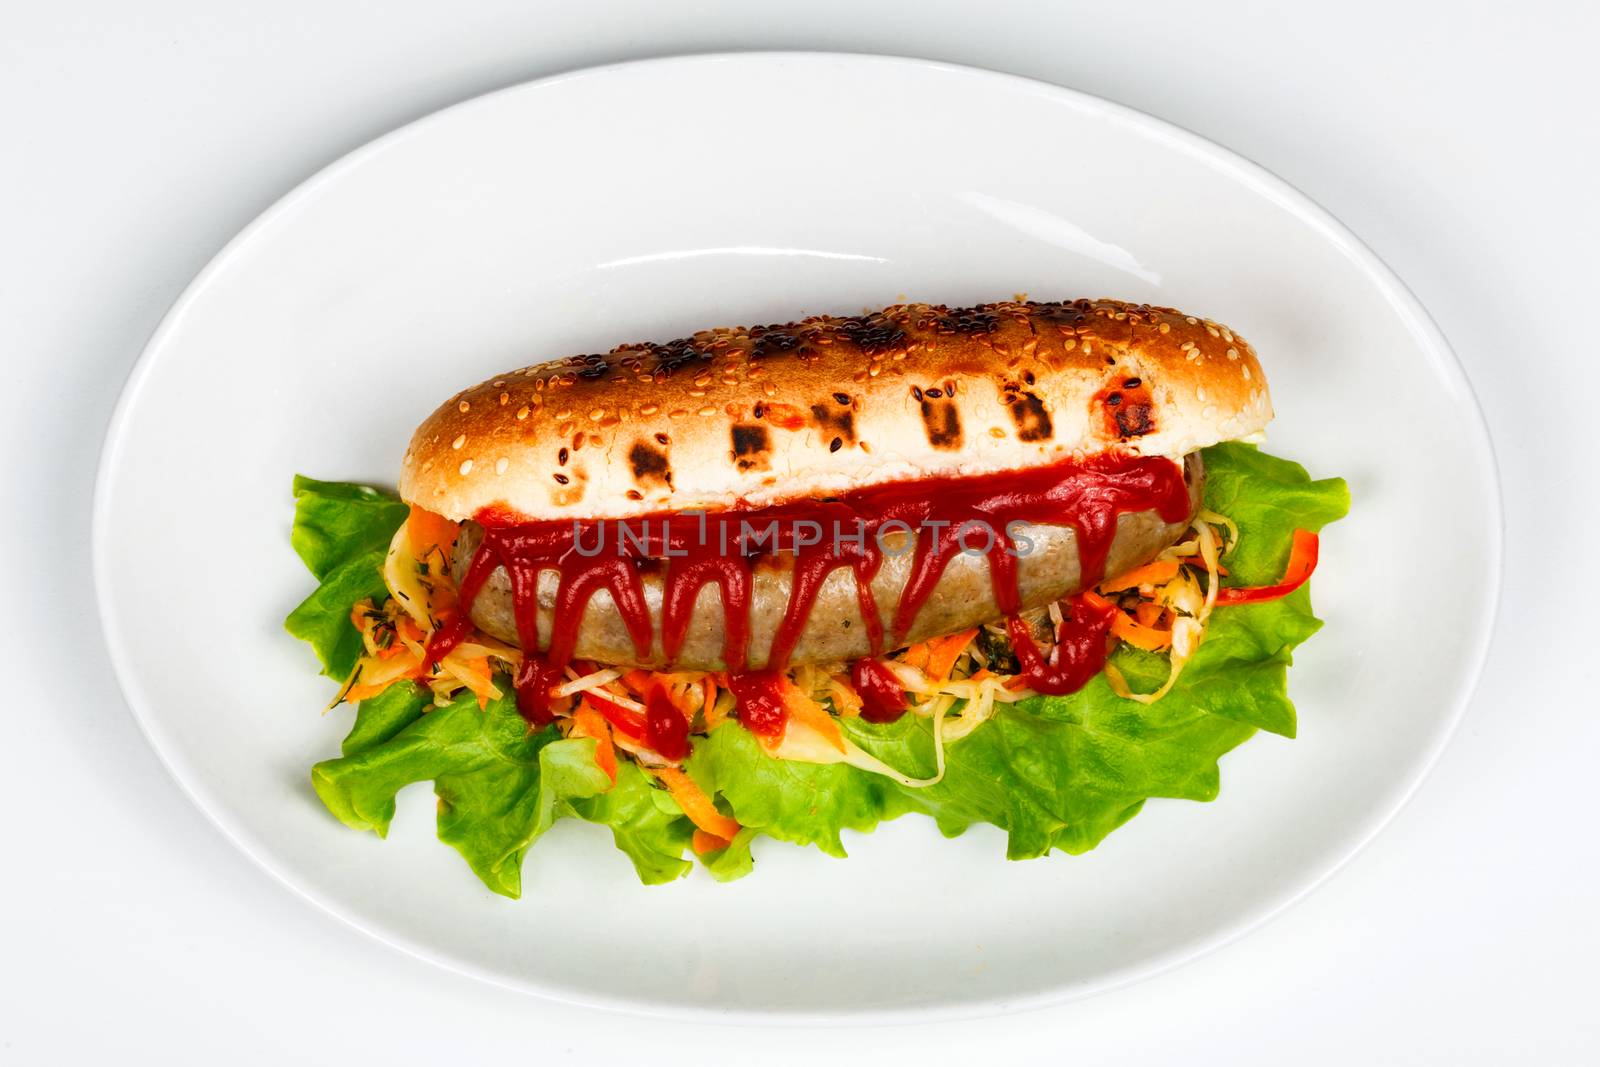 Closeup shot of a hot dog on a plate